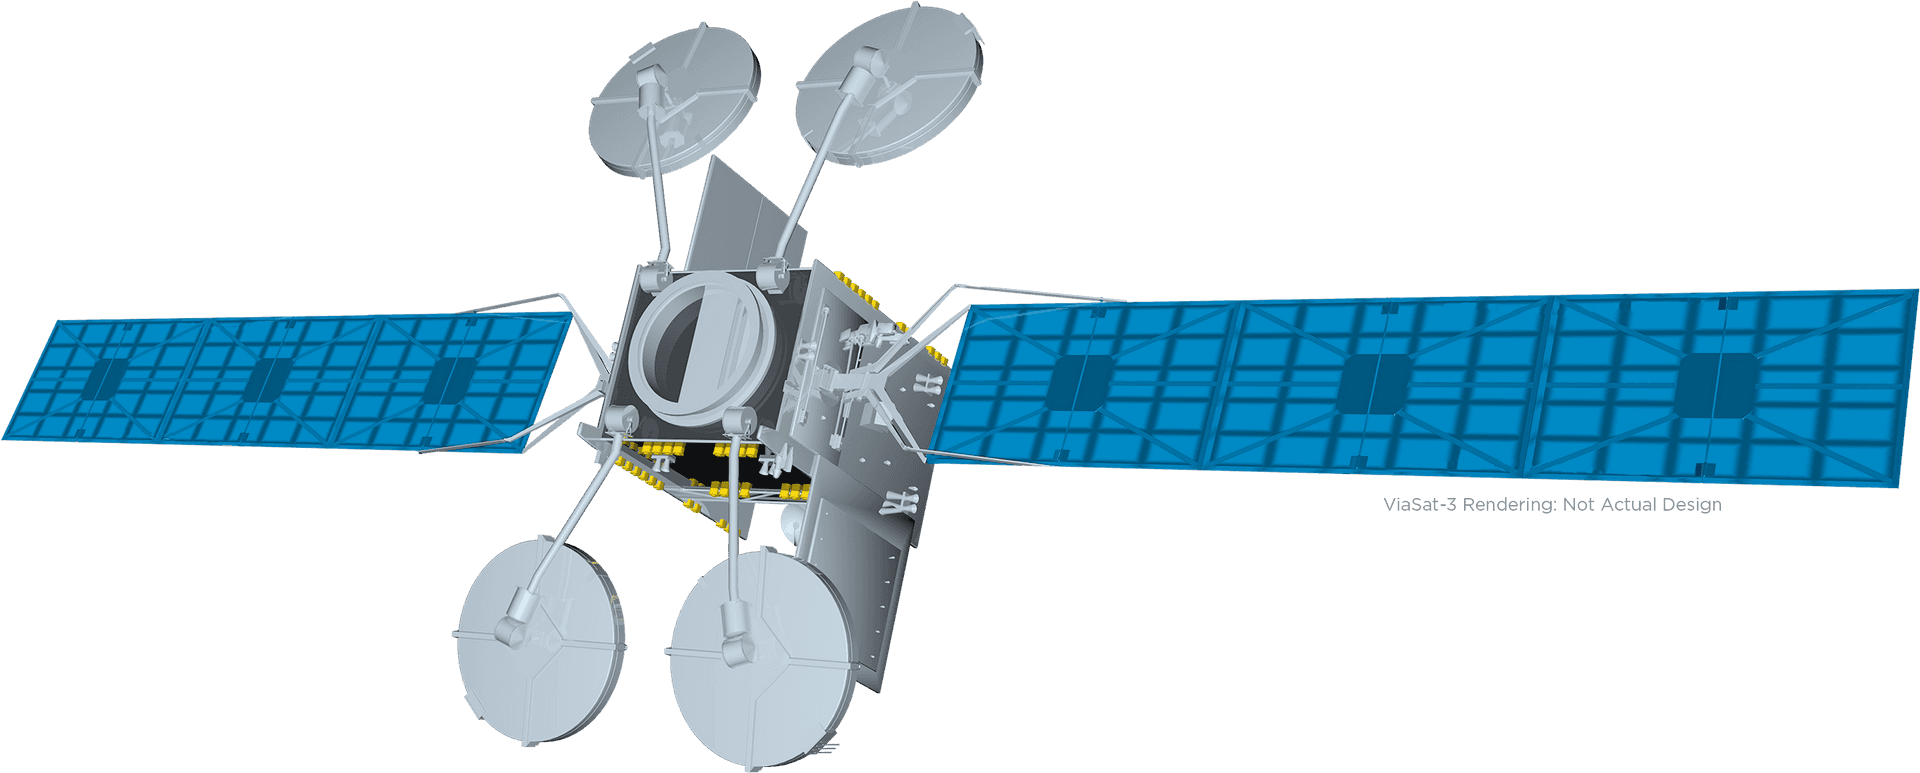 Satellite Rendering Blueprint Design PNG image